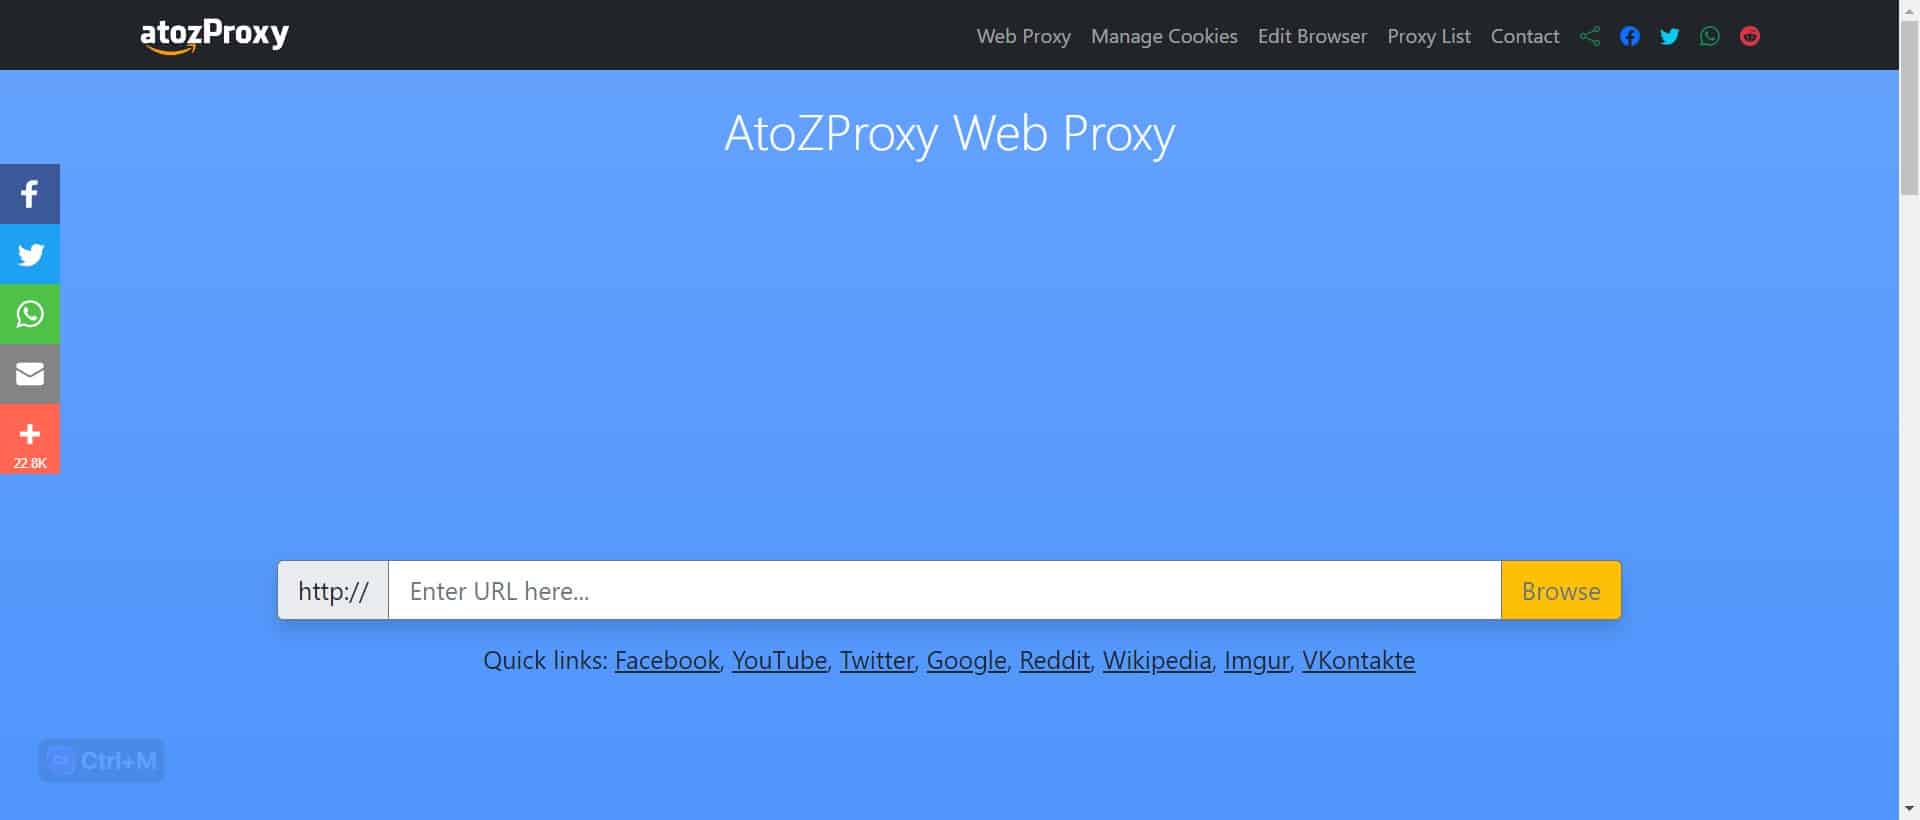 AtoZ Proxy website